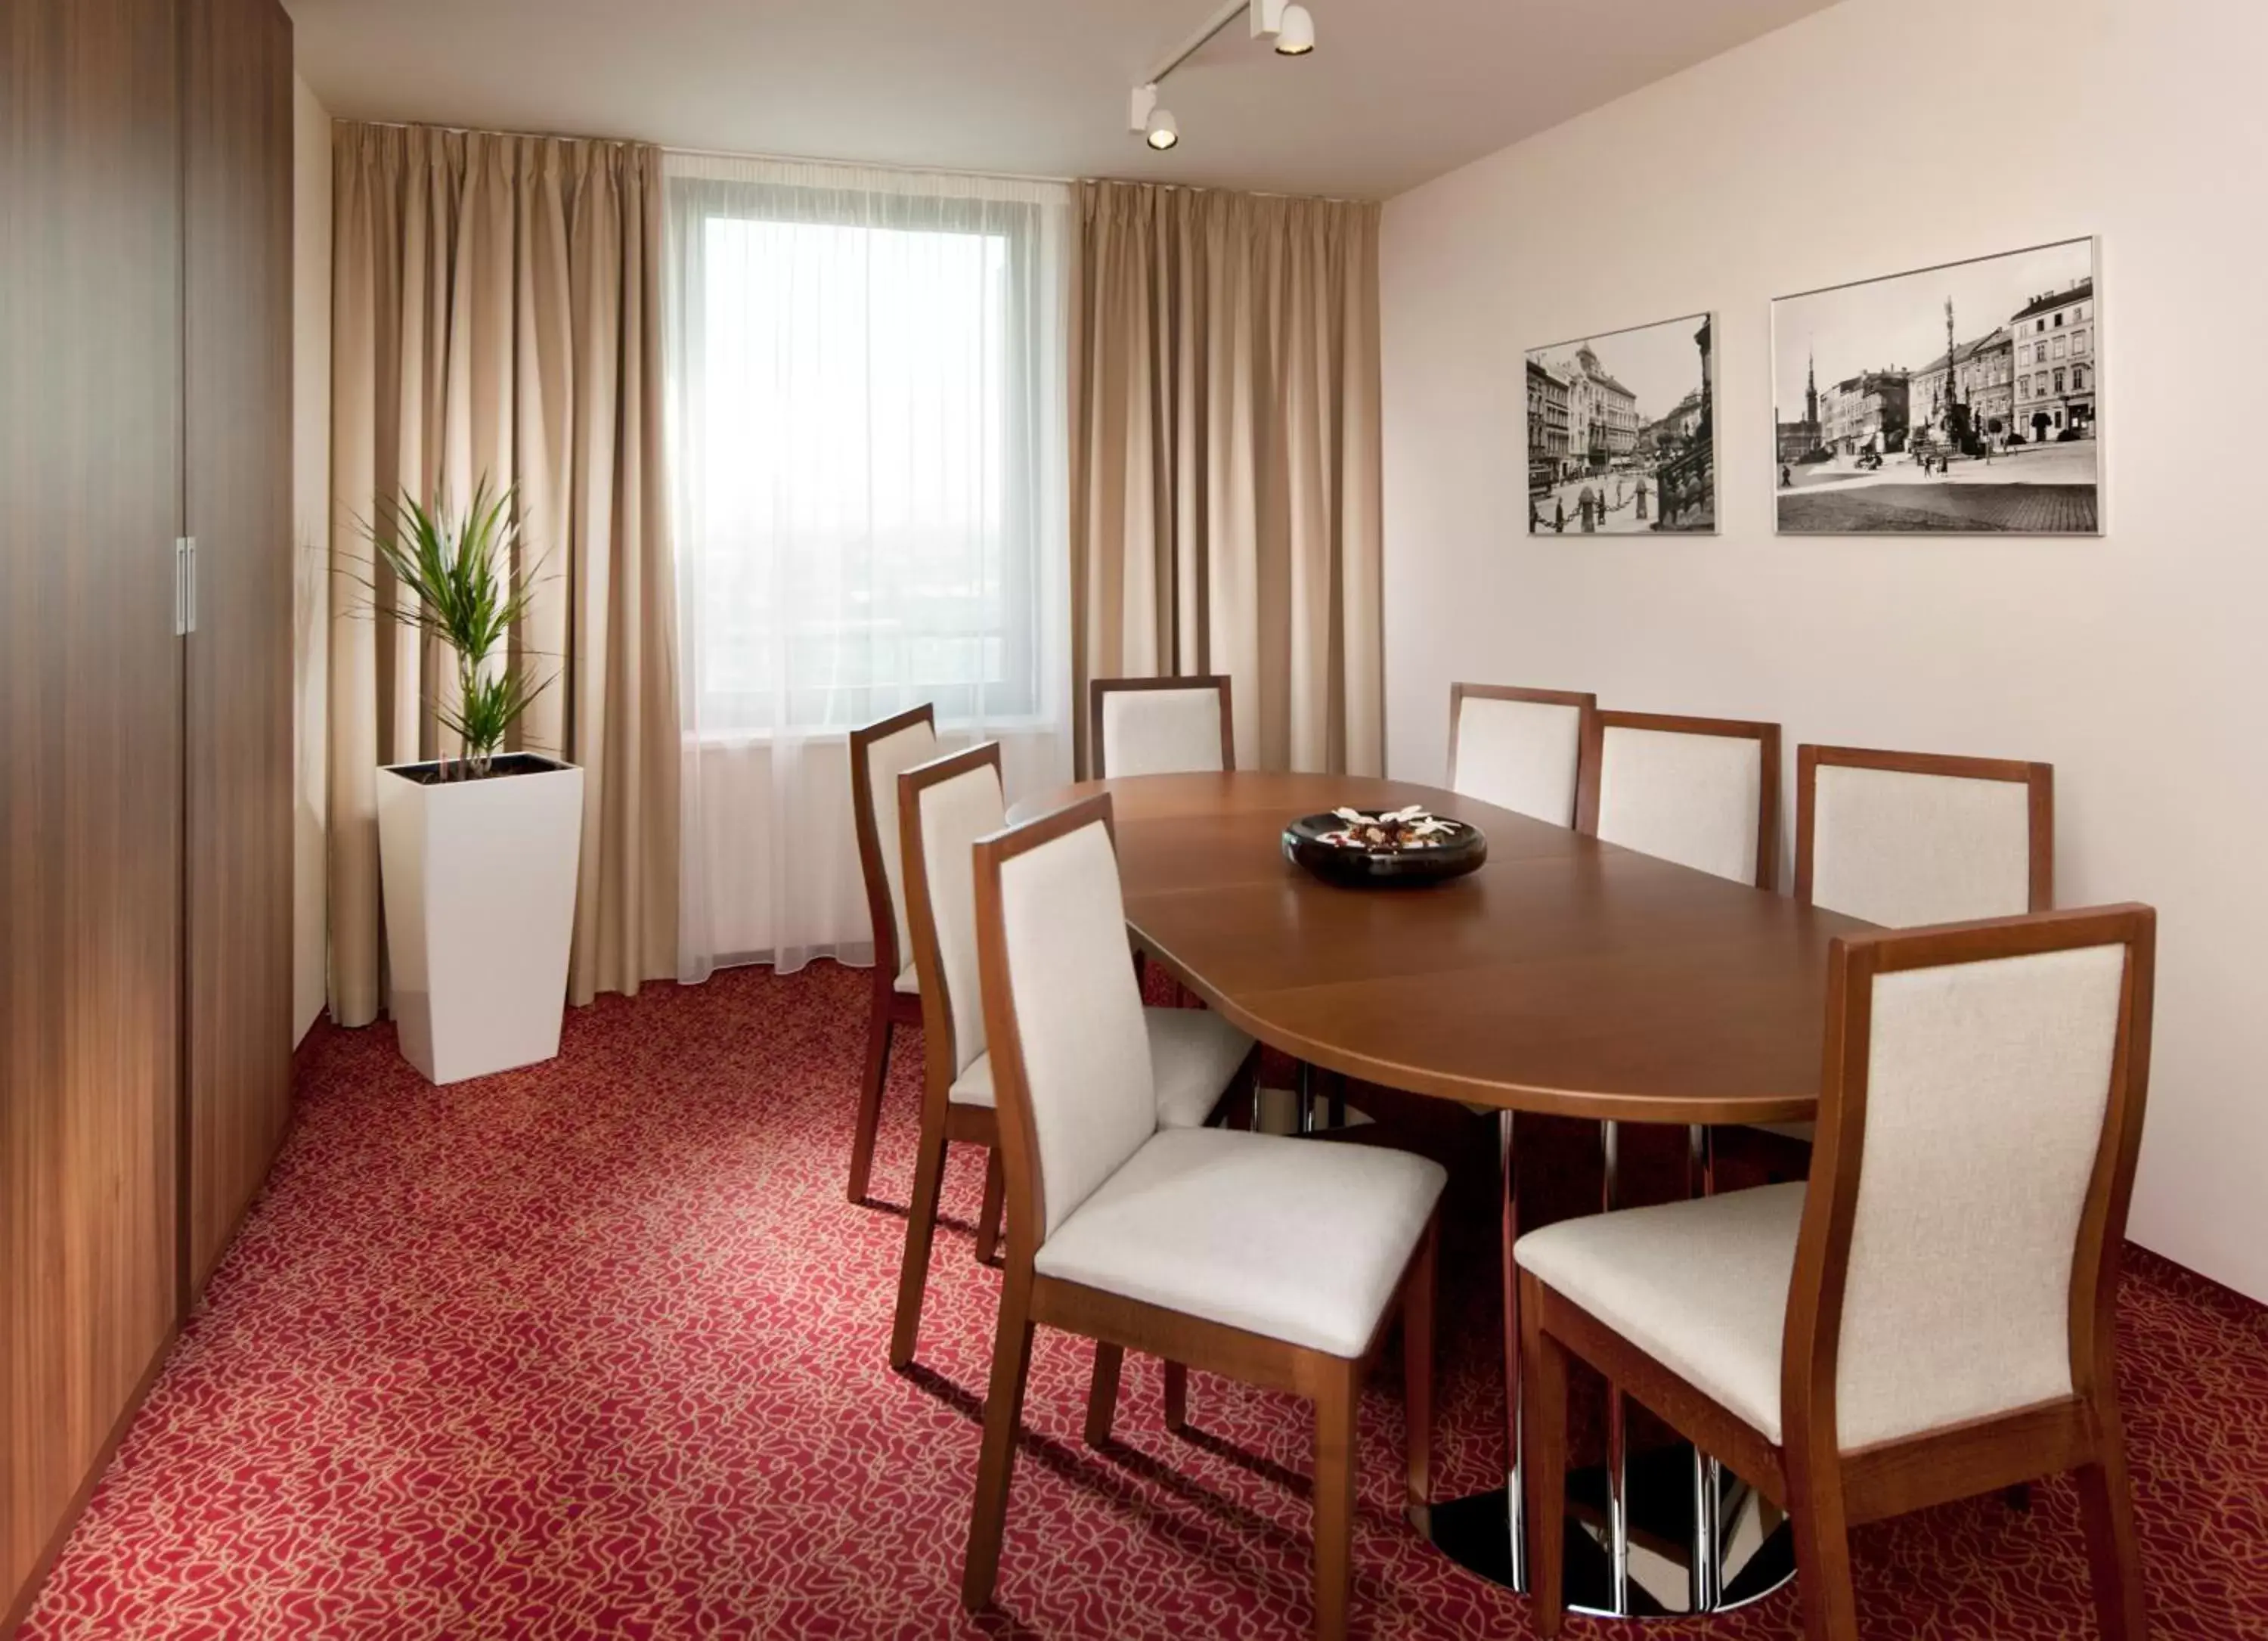 Area and facilities, Dining Area in Clarion Congress Hotel Olomouc